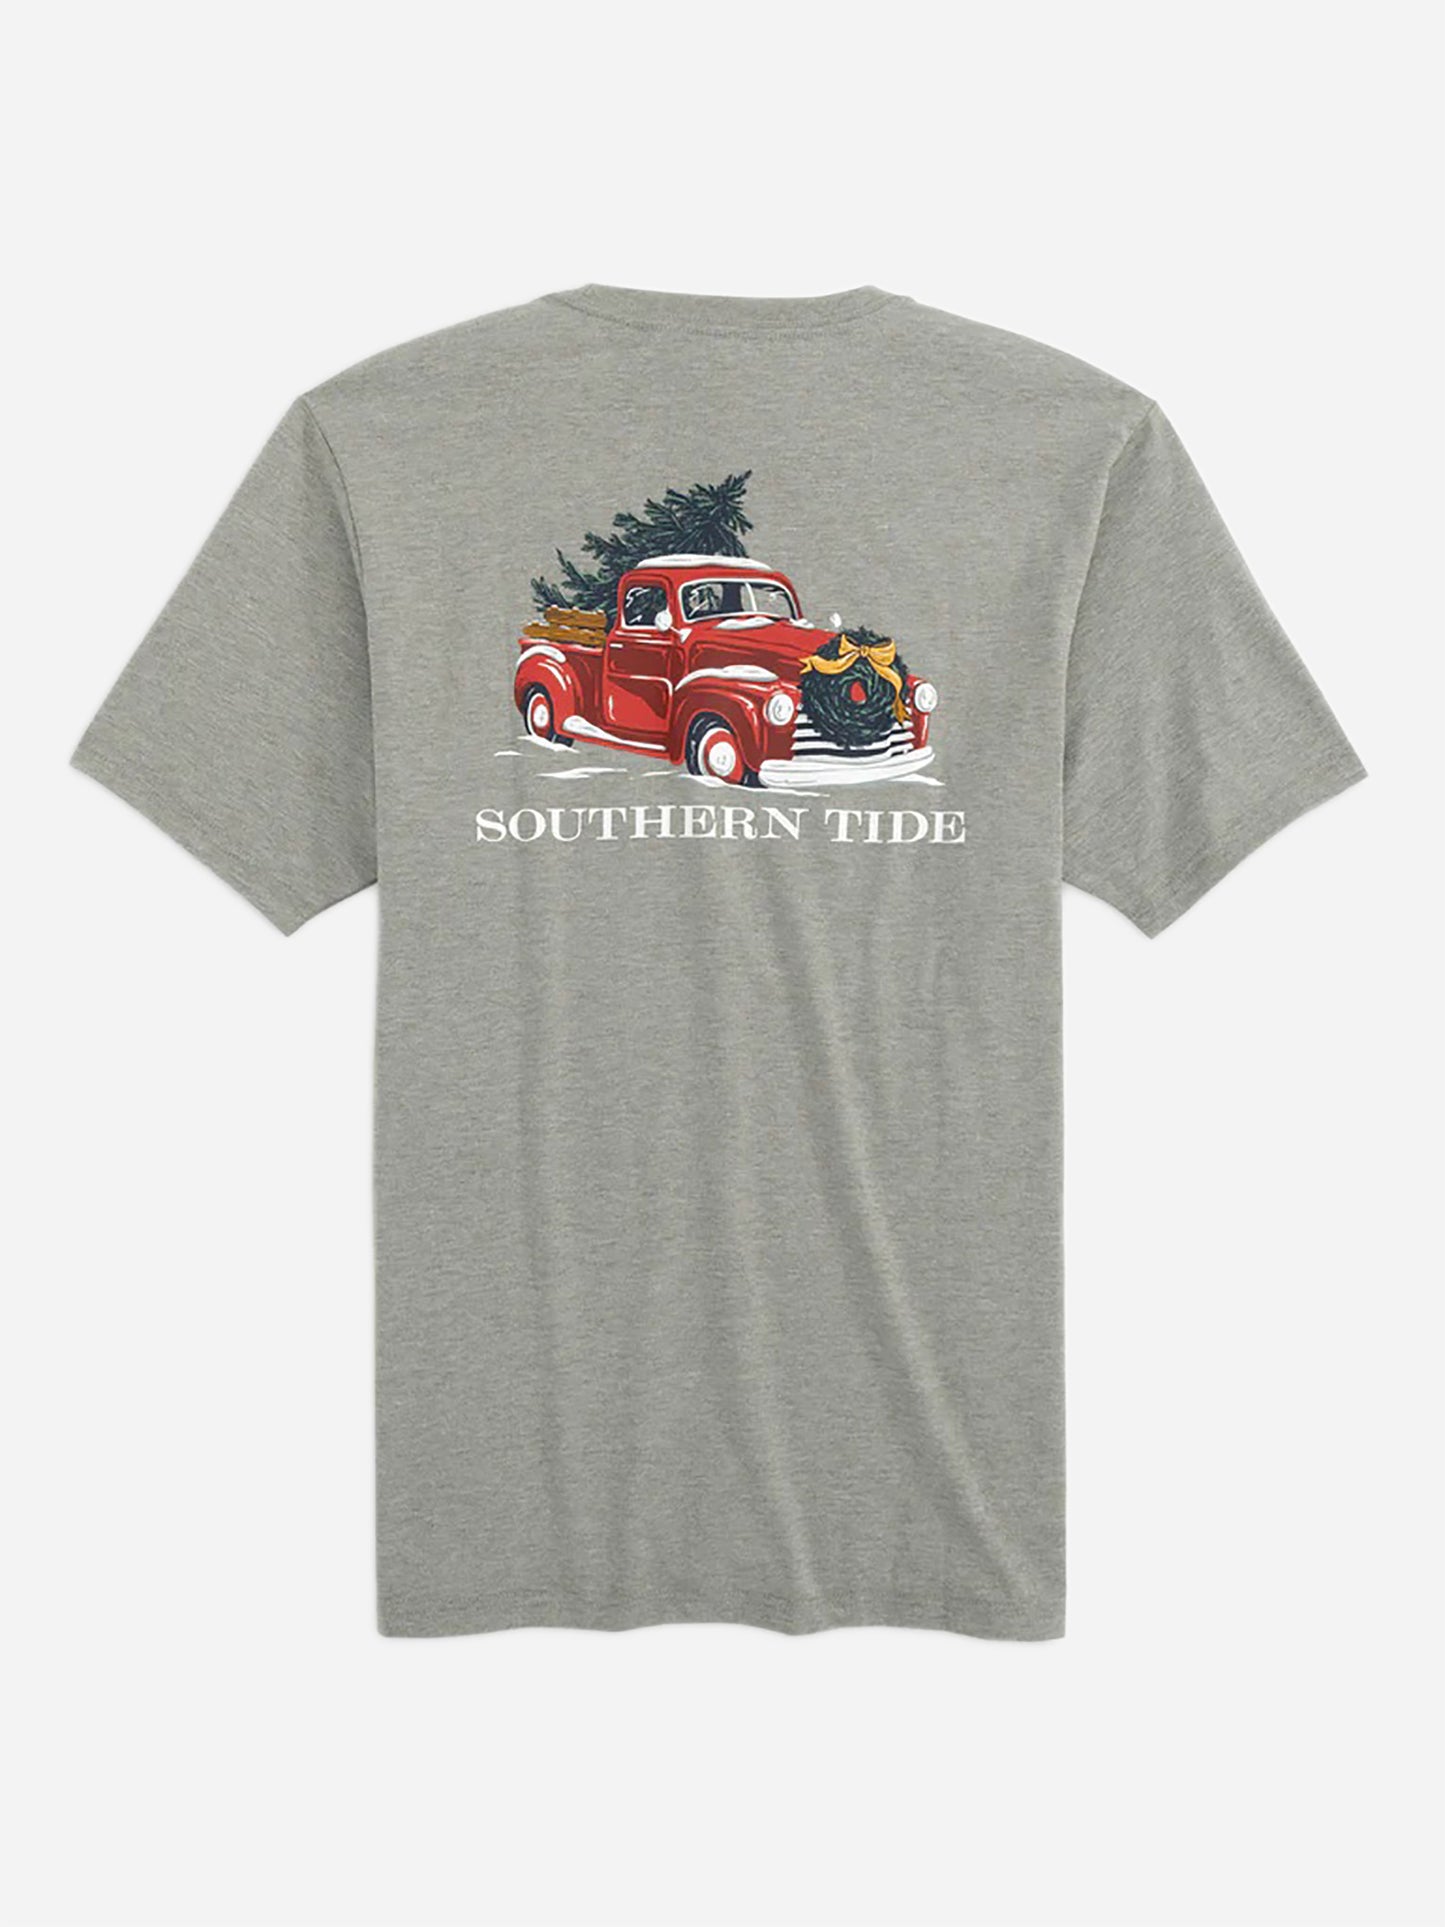 Southern Tide Men's Heather Snowy Truck T-Shirt